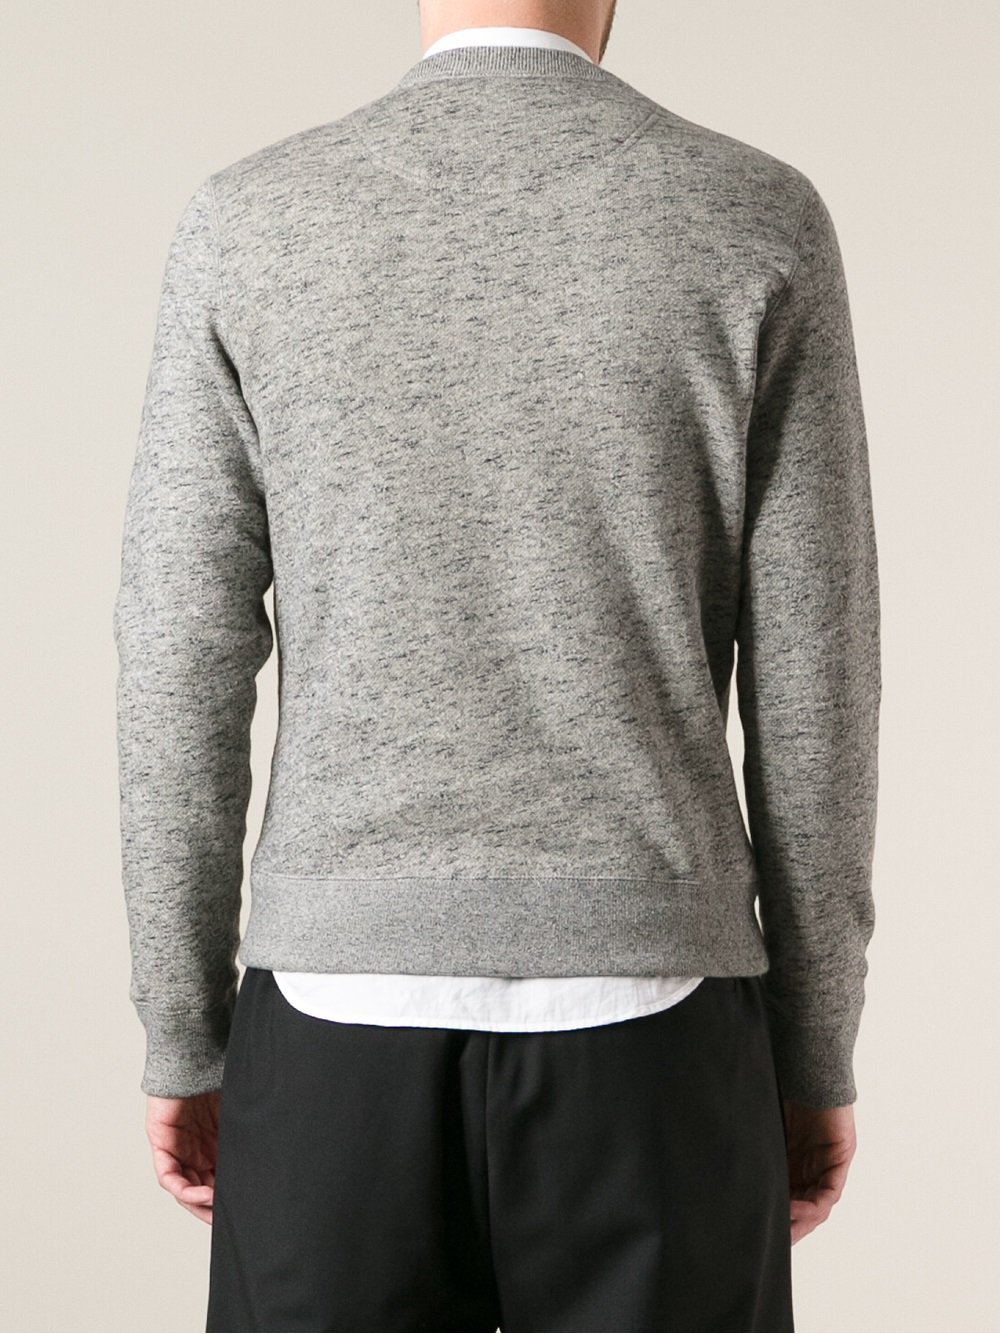 KENZO Brody Sweater in Grey (Gray) for Men - Lyst